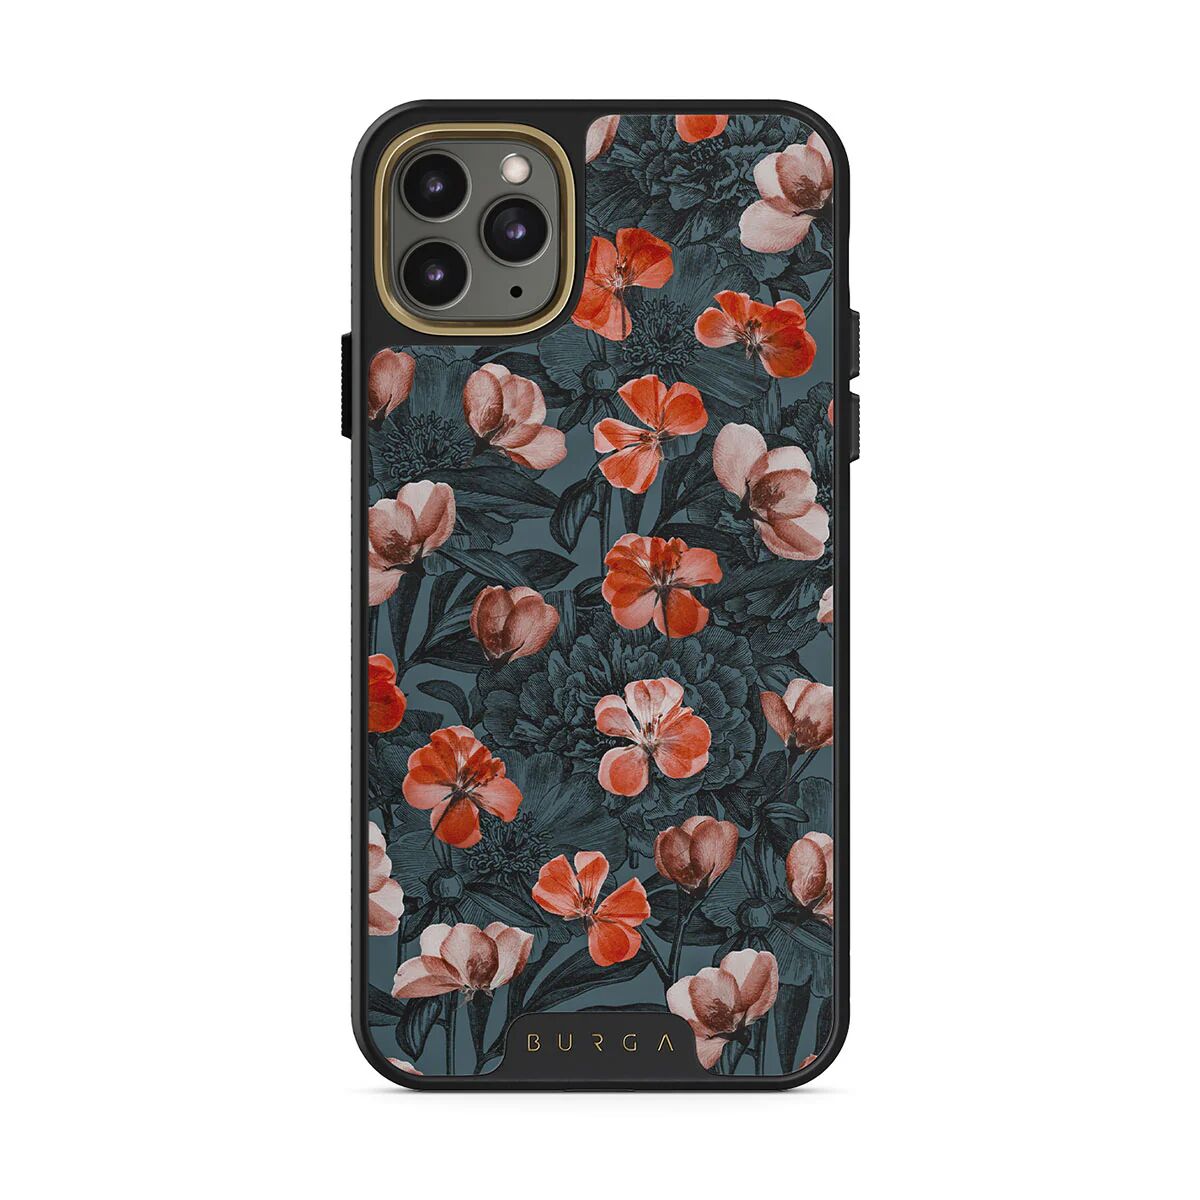 BURGA No Rain No Flowers - iPhone 11 Pro Max Case